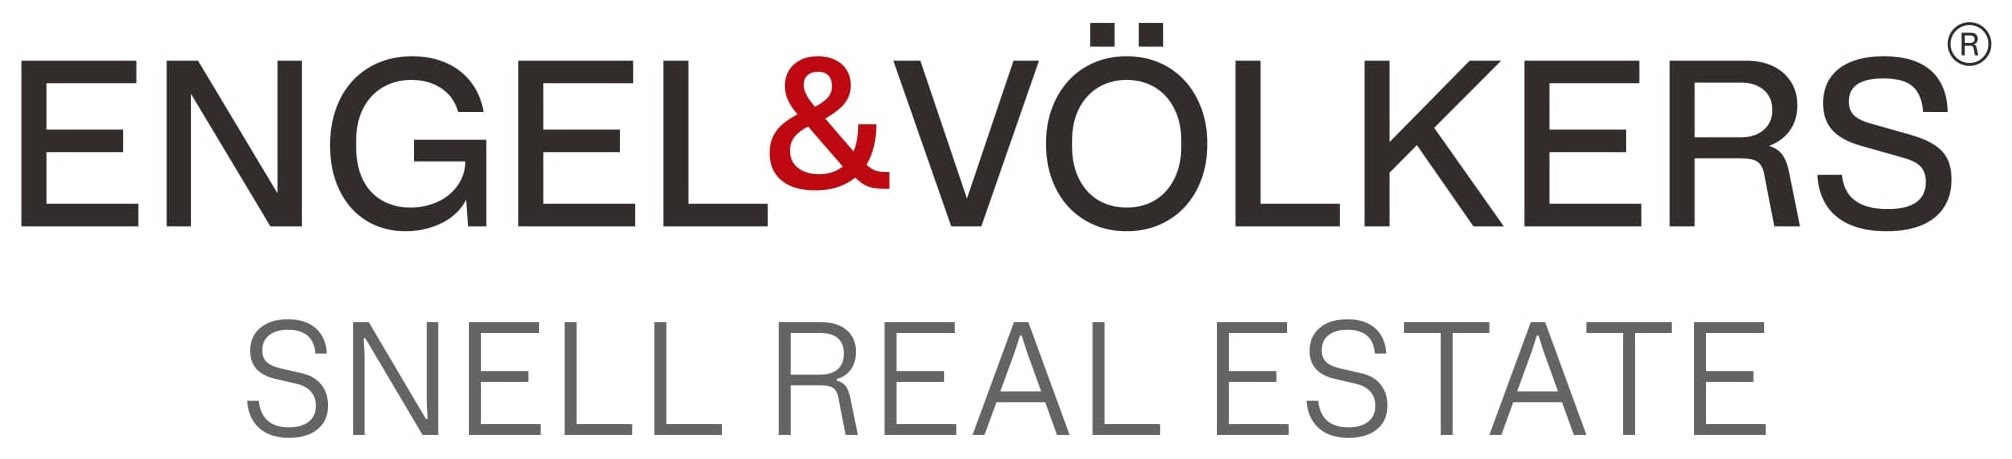 Engel & Völkers Snell Real Estate Logo PNG with white background